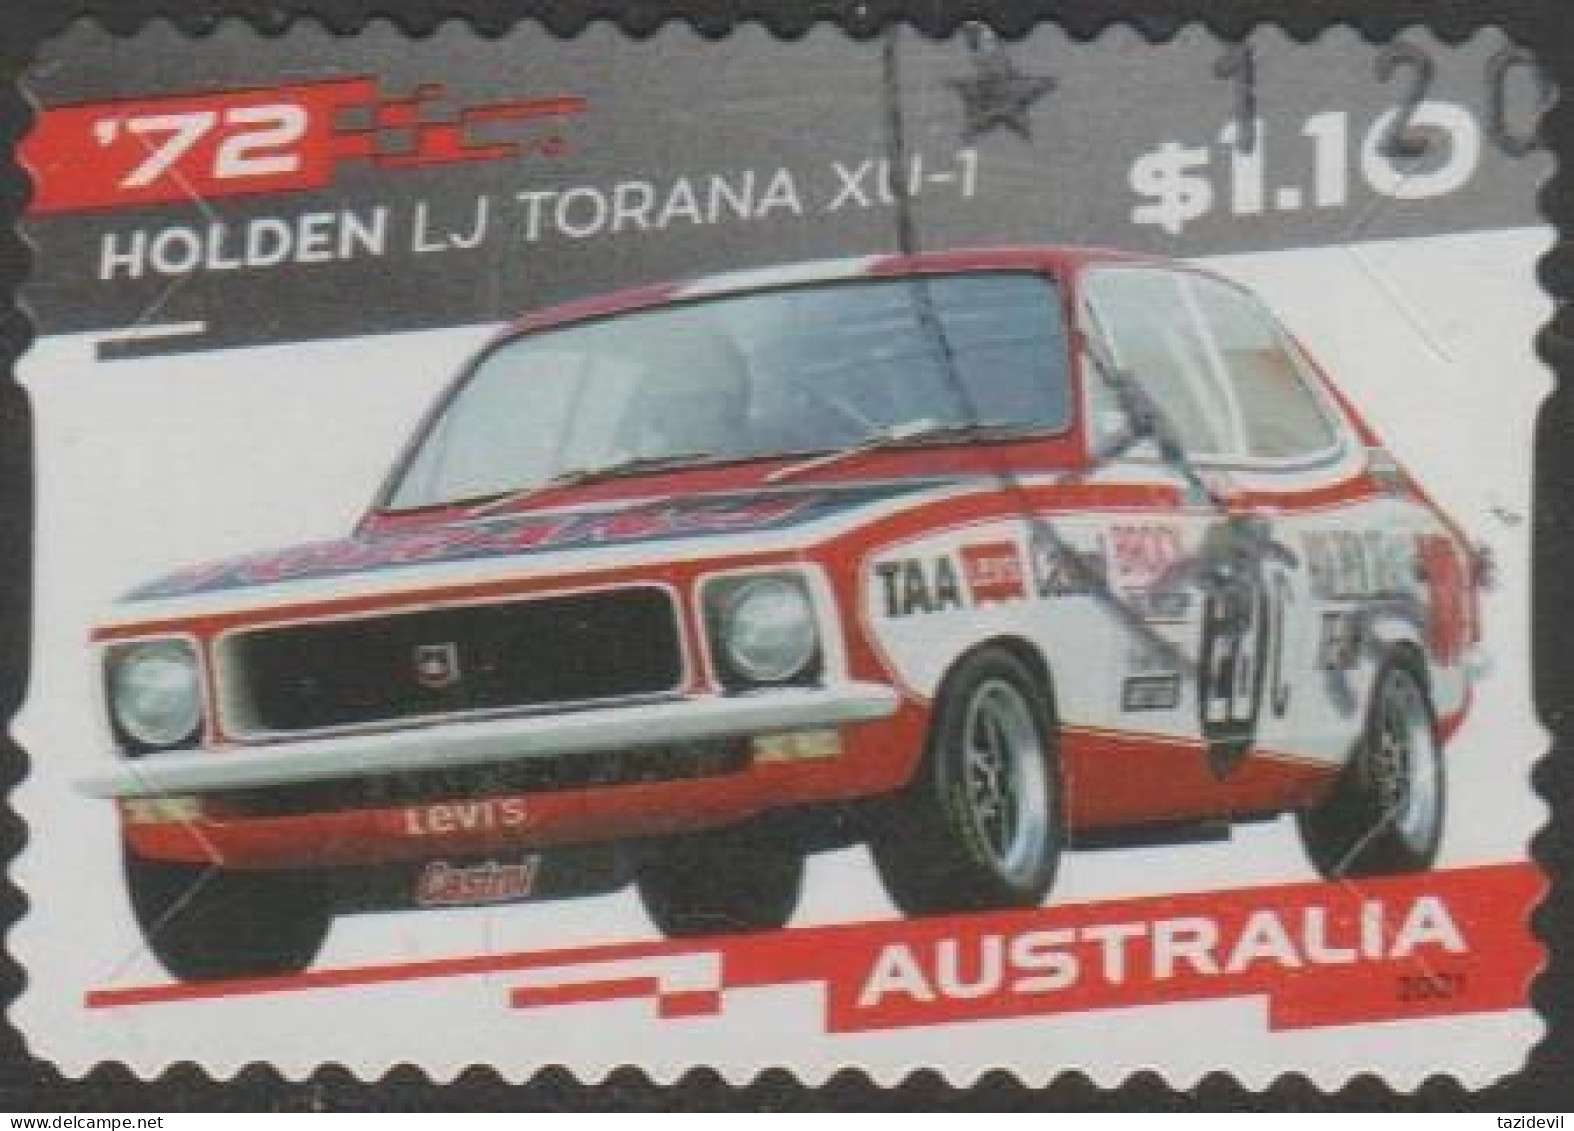 AUSTRALIA - DIE-CUT-USED 2021 $1.10 Holden's Last Roar - Holden LJ Torana XU1 - Used Stamps